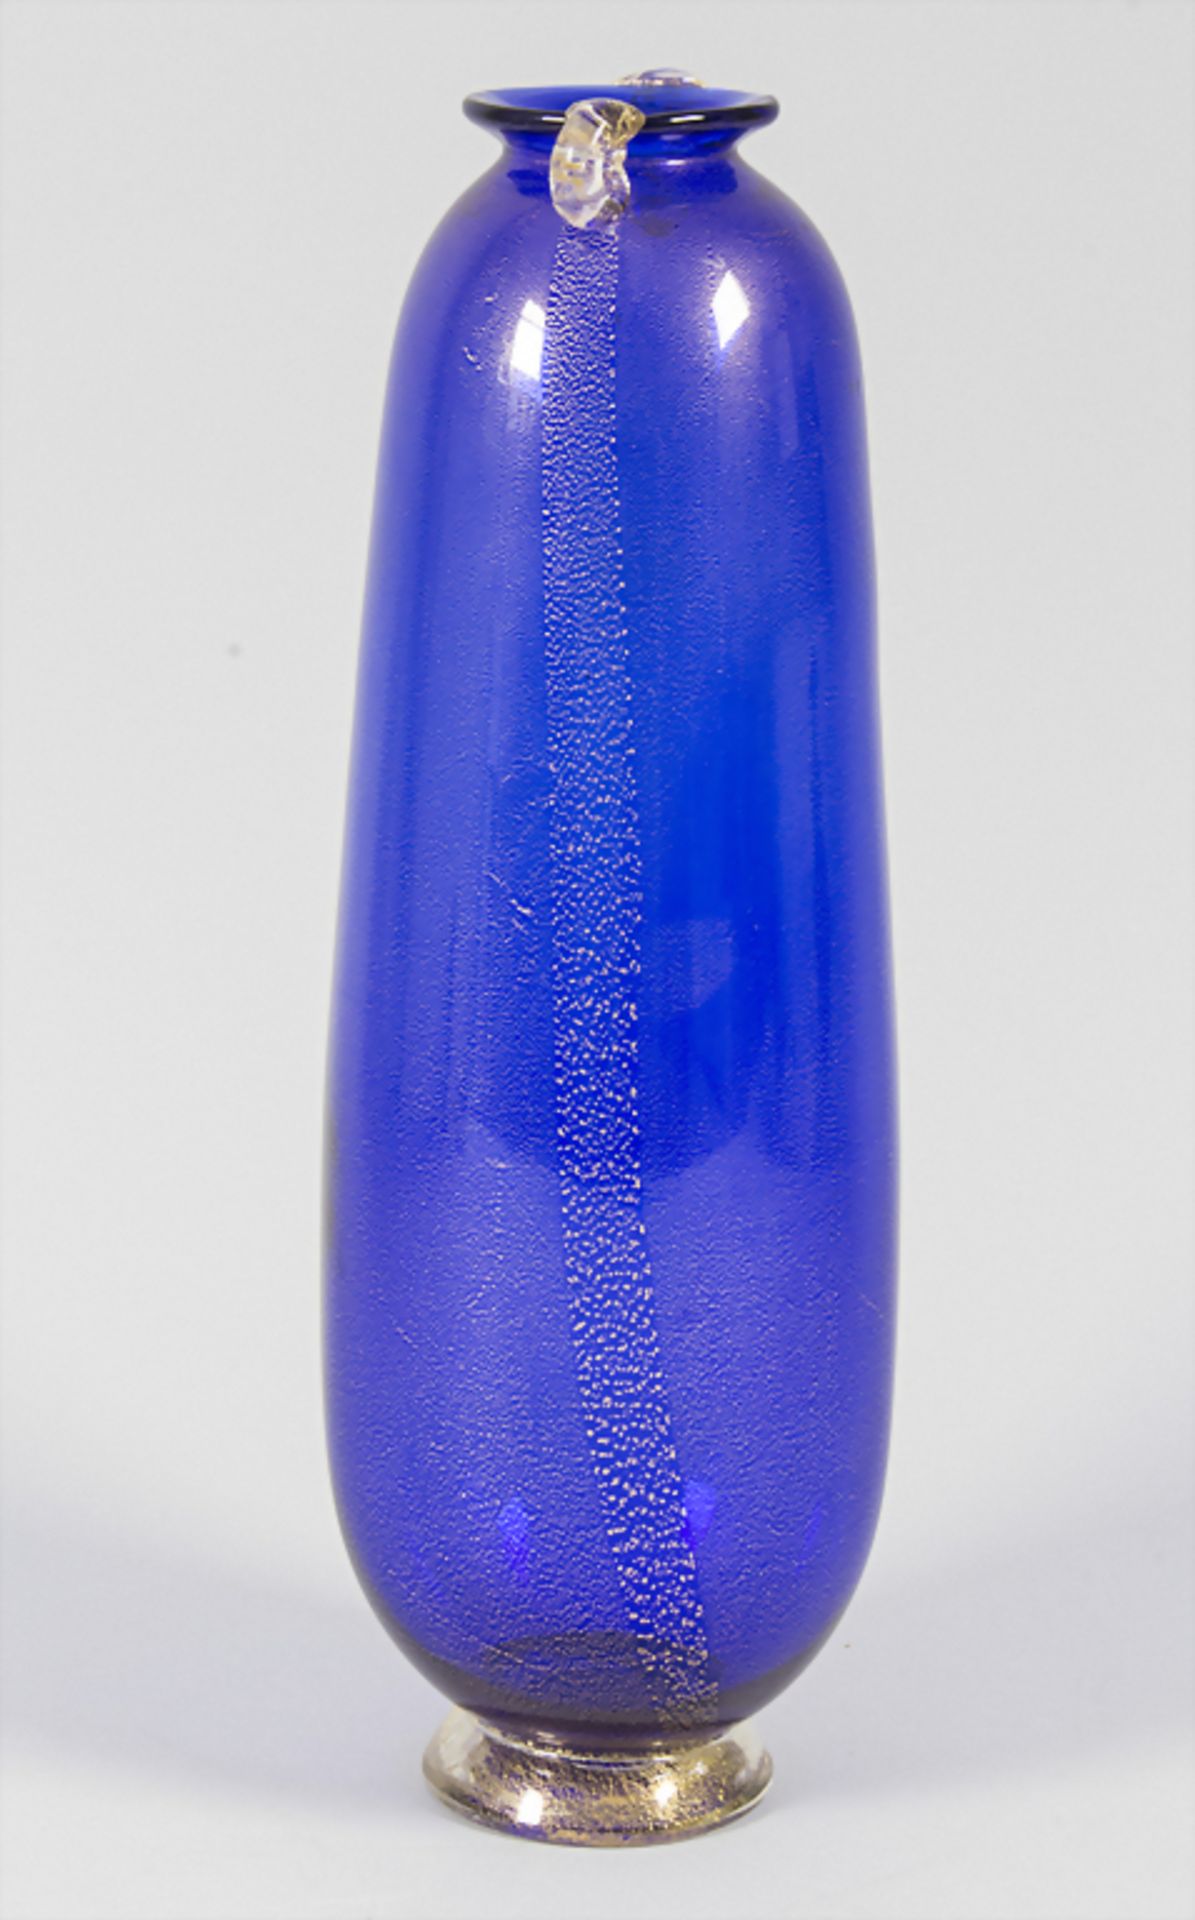 Glasziervase / A decorative glass vase, wohl AVEM (Arte Vetraria Muranese), Murano, 40/50er Jahr - Image 2 of 6